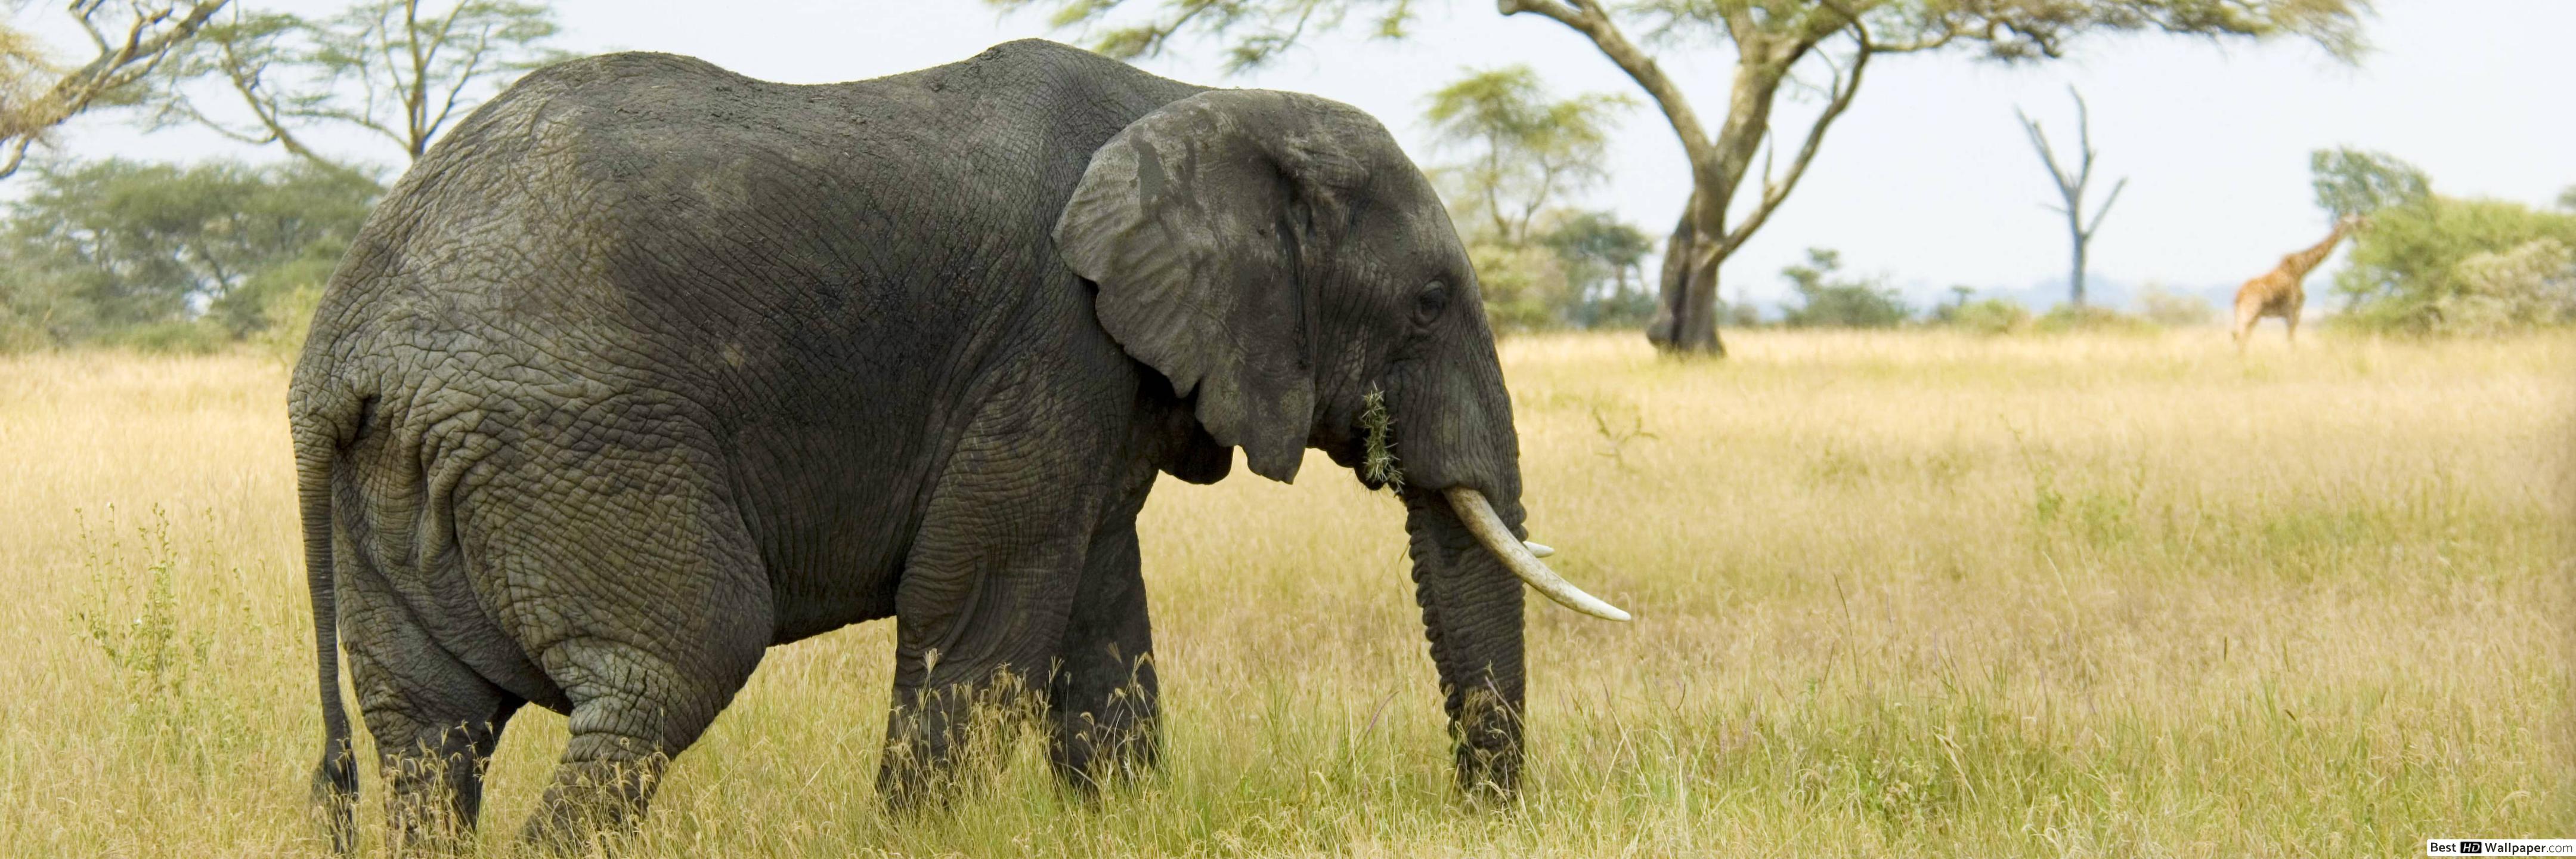 elephant wallpaper,elephant,terrestrial animal,elephants and mammoths,vertebrate,wildlife